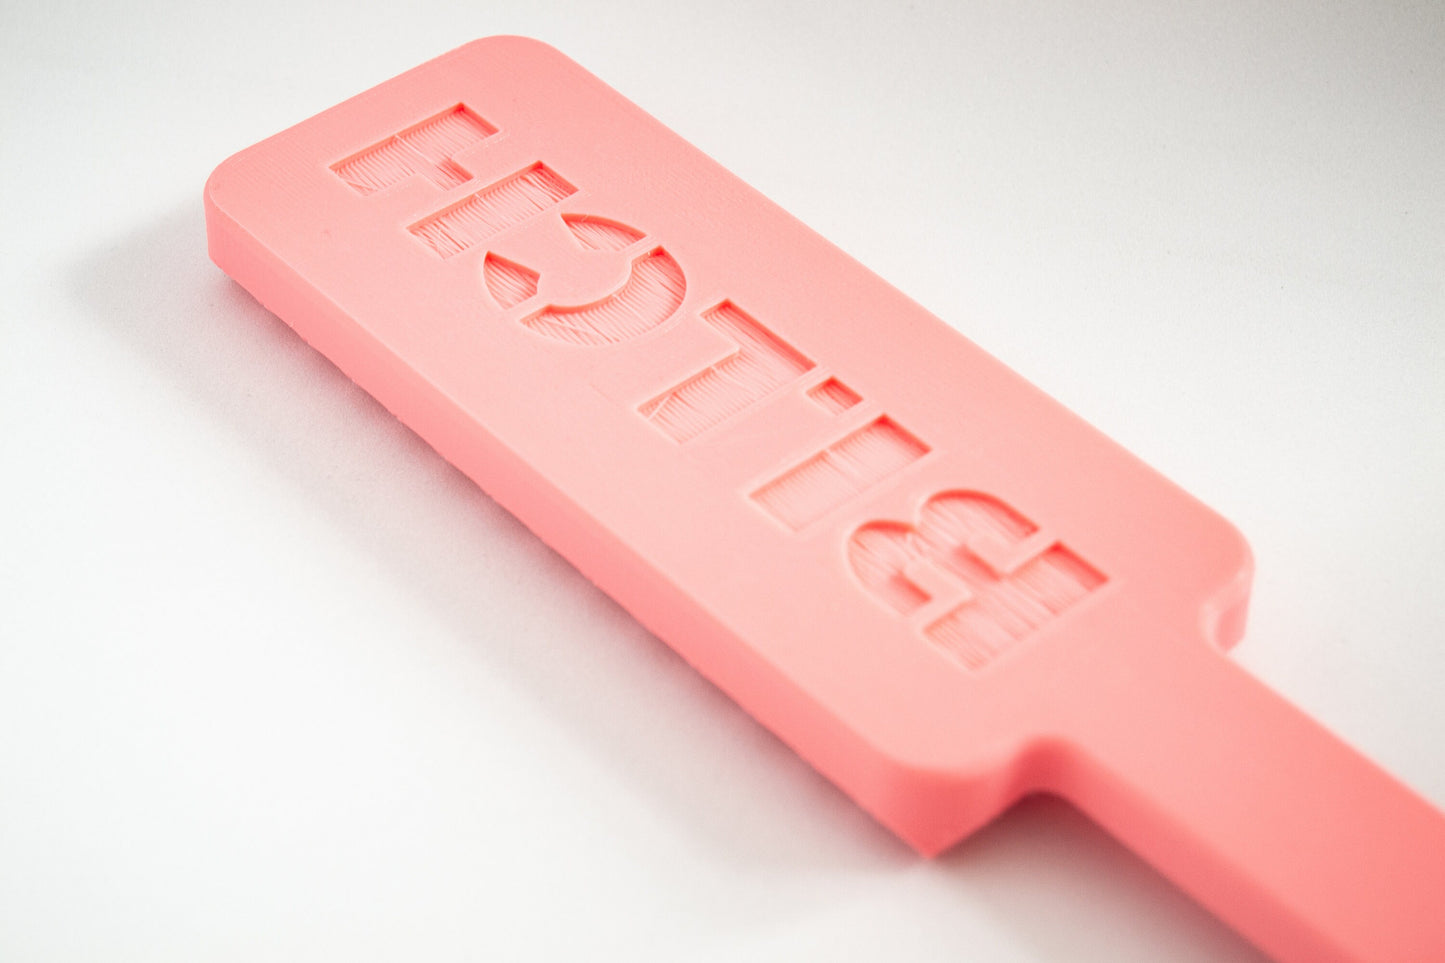 Customizable Stinging Paddle | 3D Printed - XPrint3D